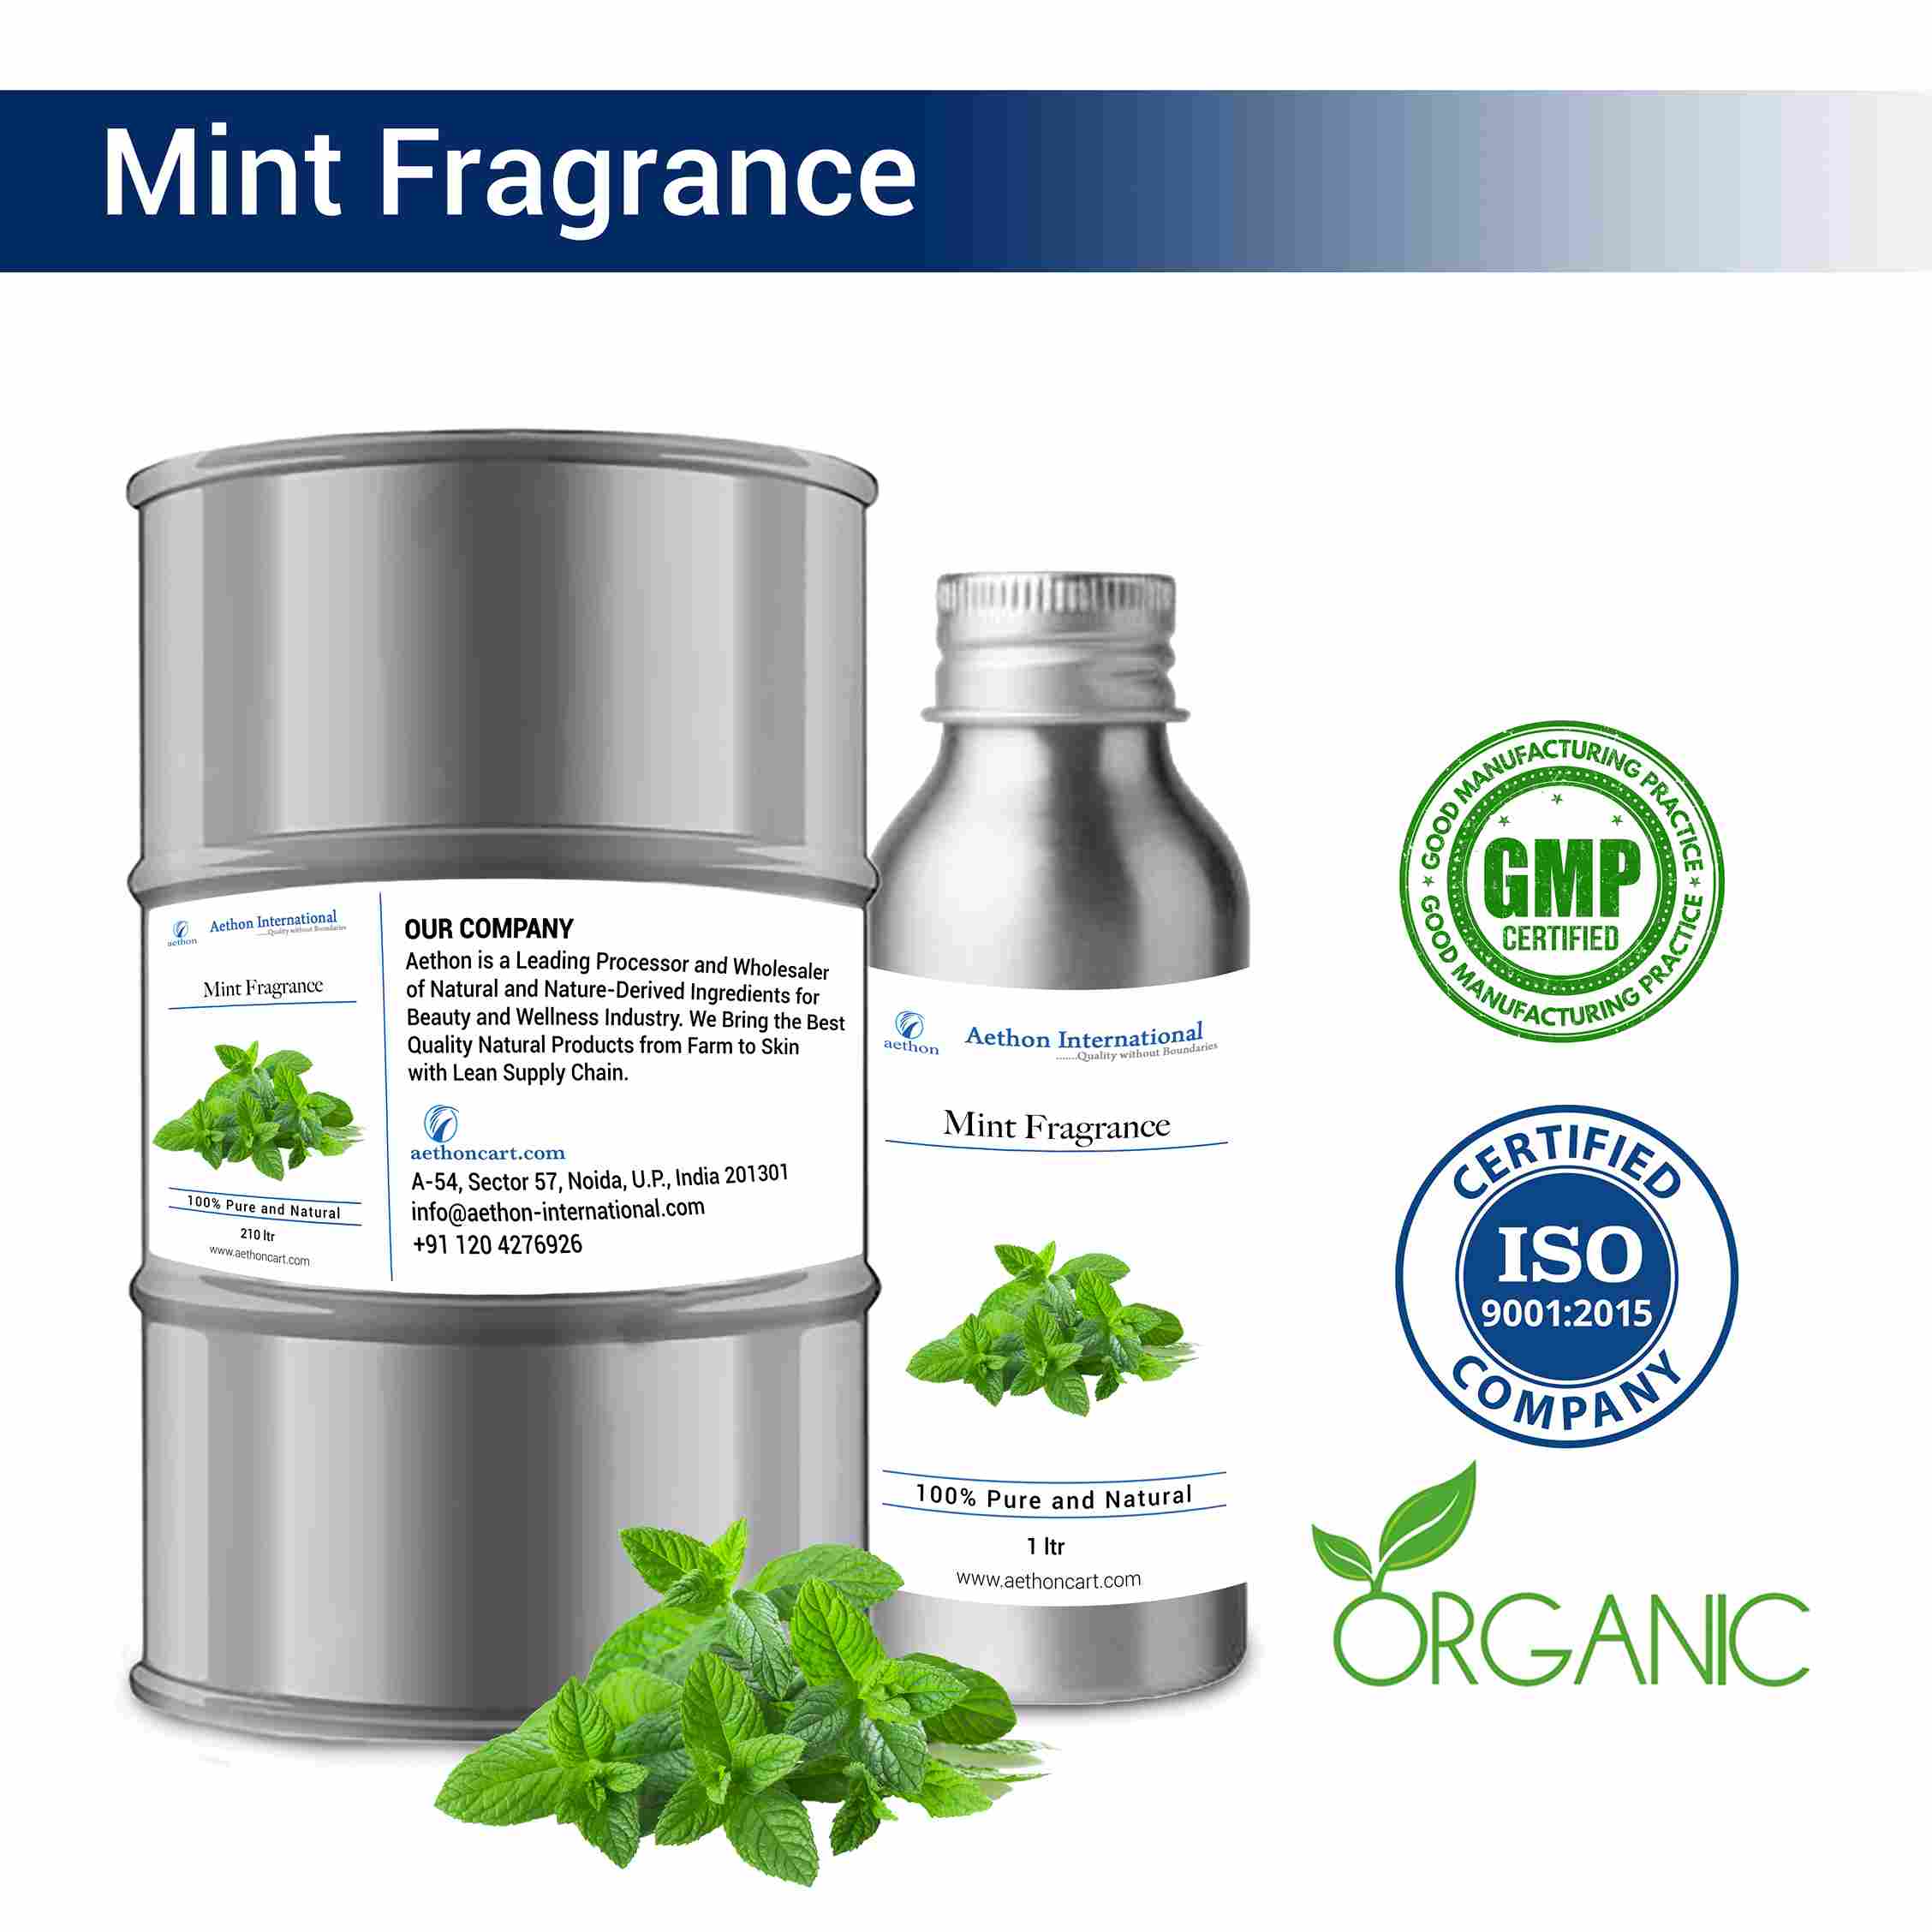 Mint Fragrance